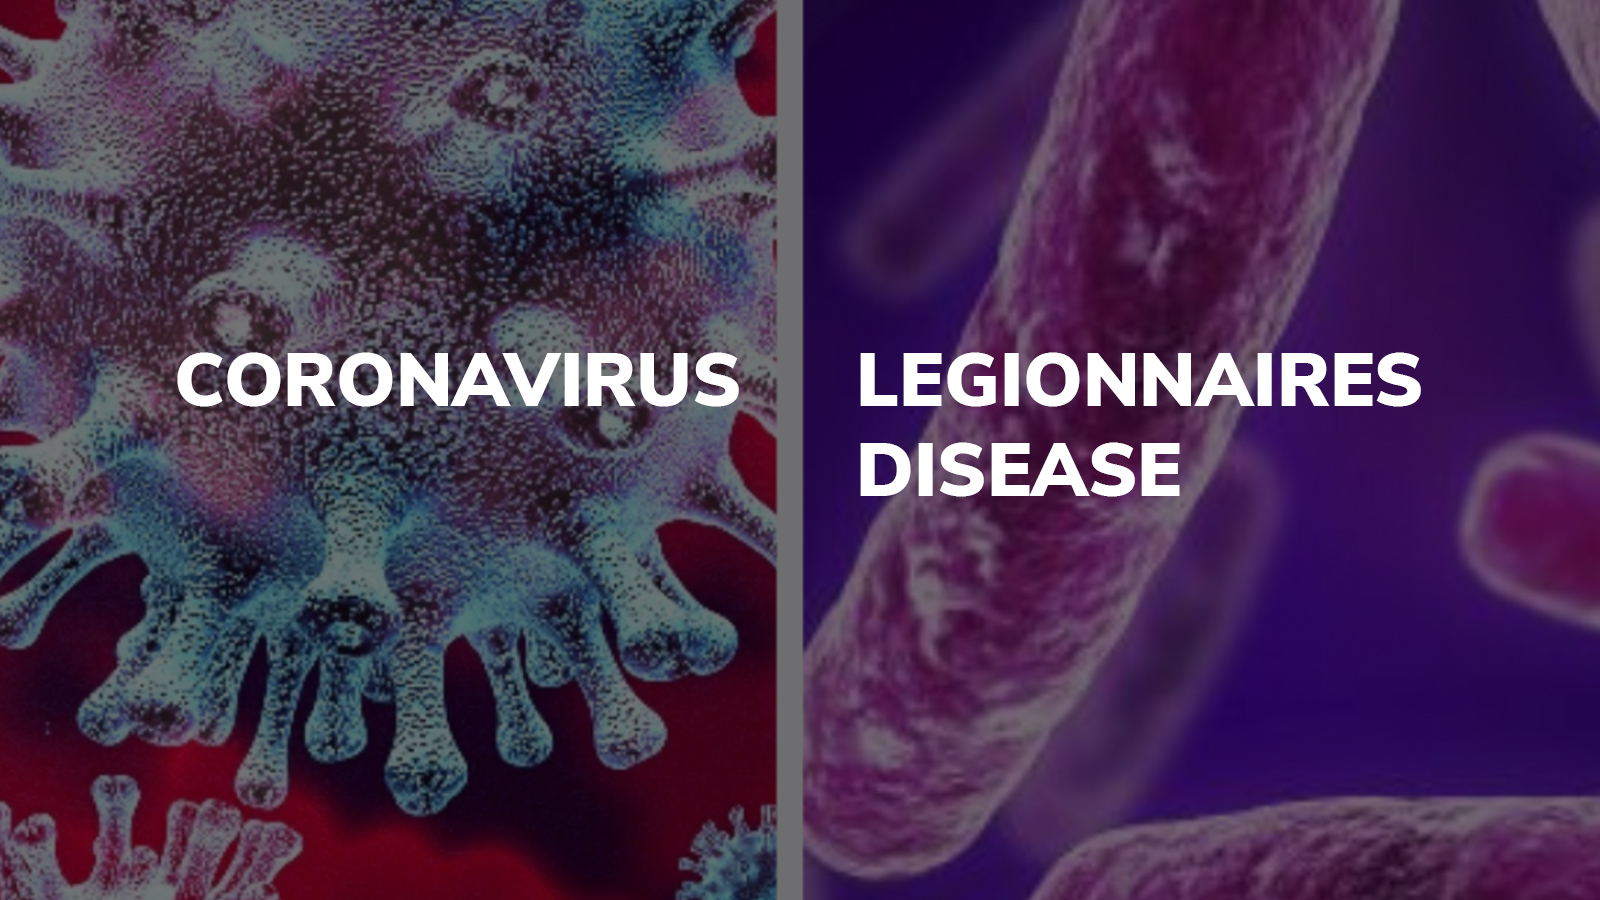 Legionnaires' Disease and COVID-19 Dueling Diseases